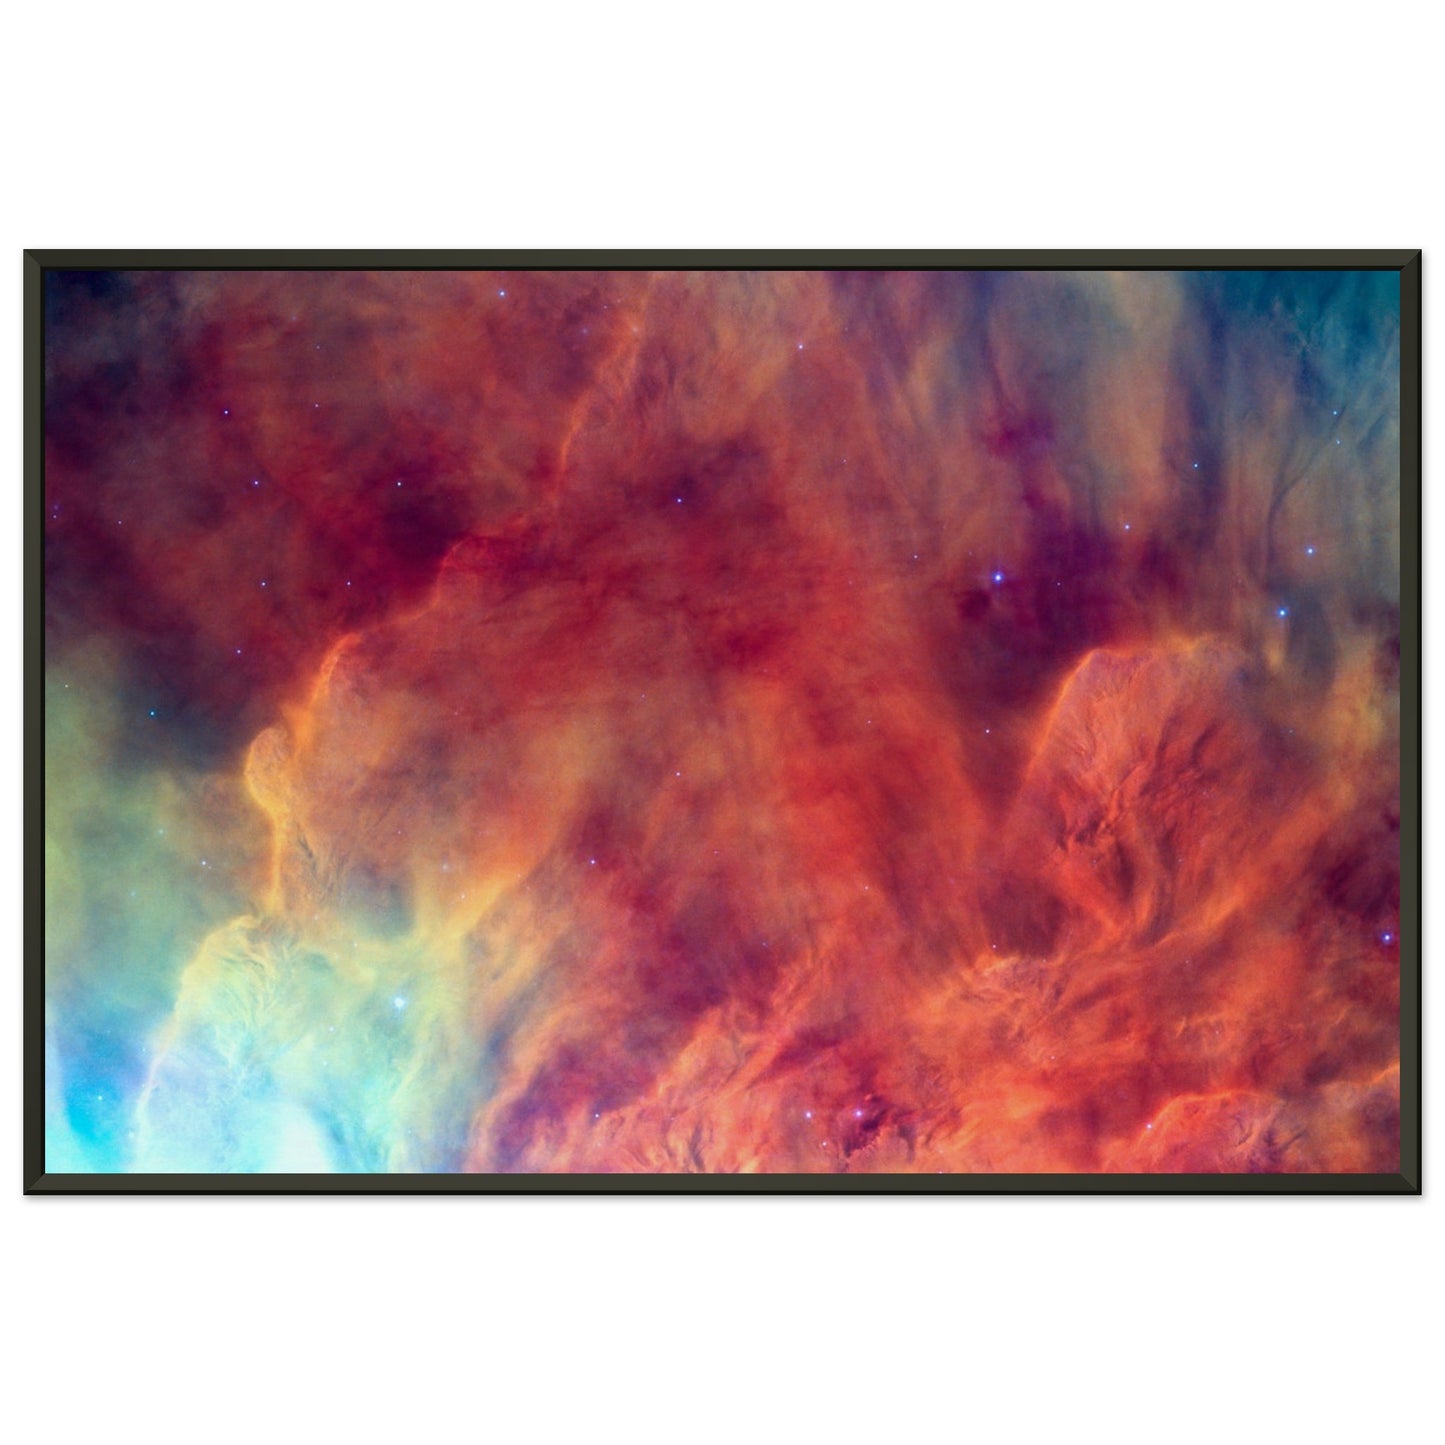 The Lagoon Nebula